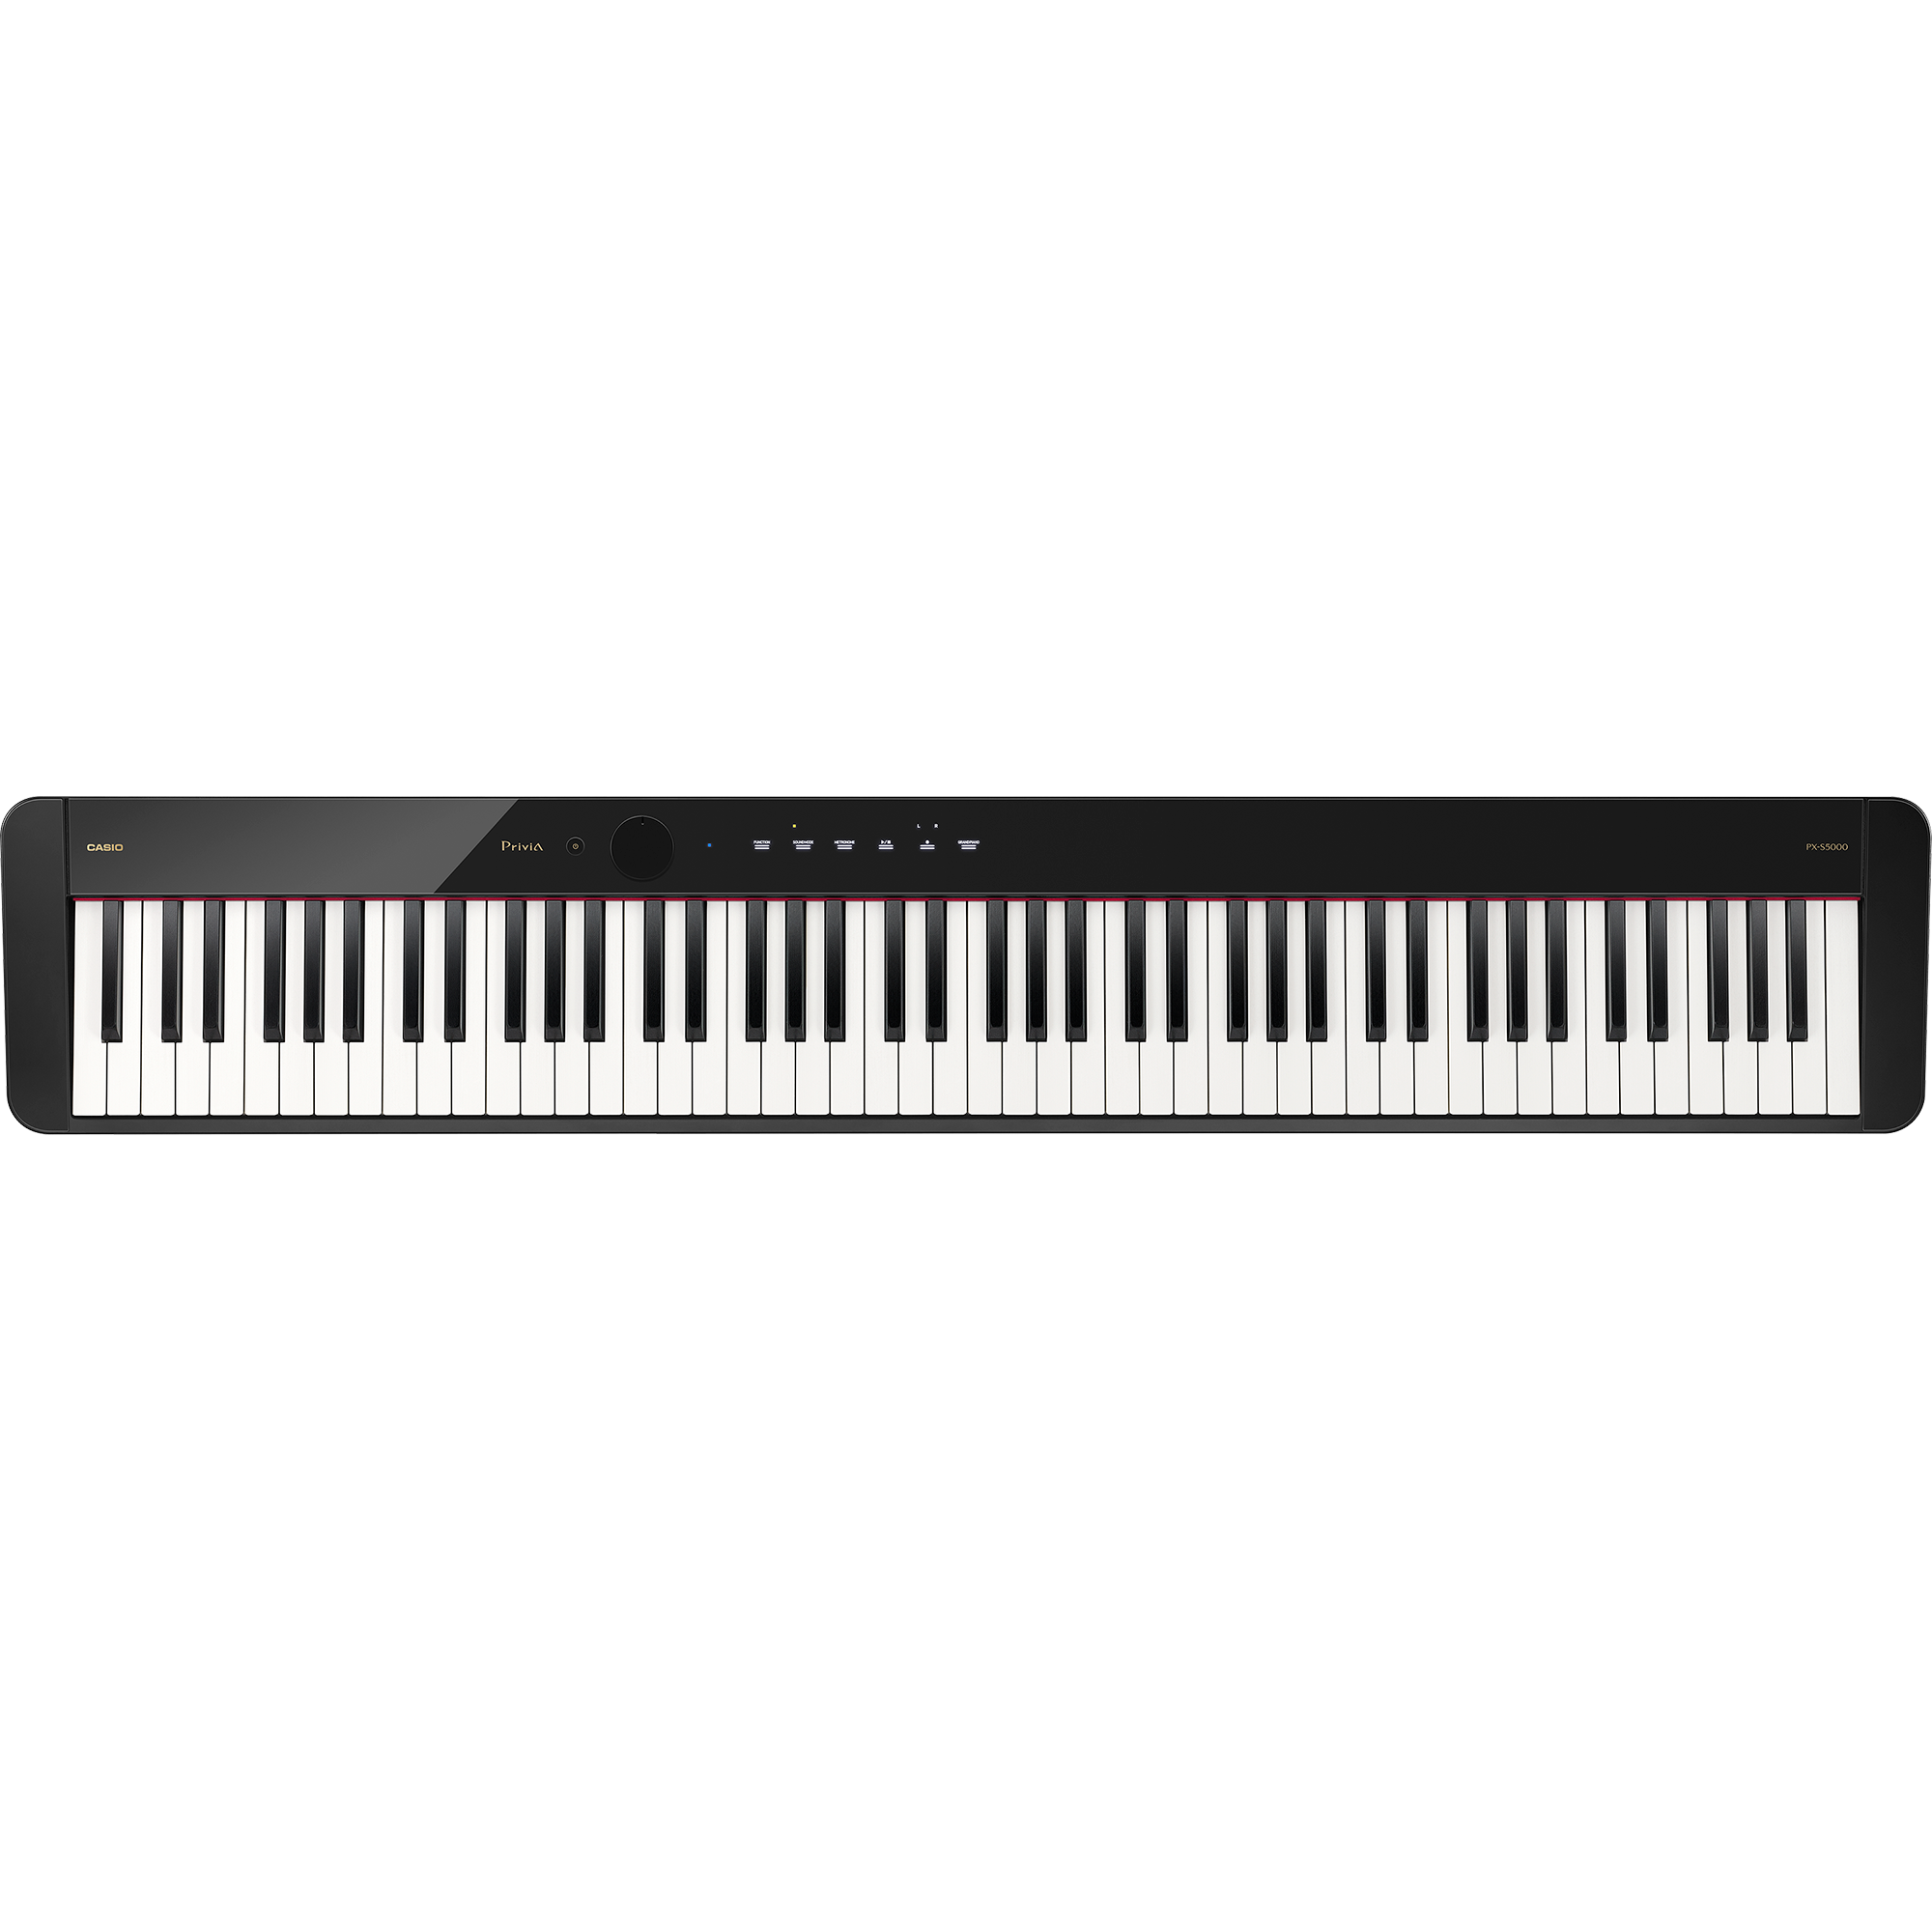 Piano Digital - CASIO PX-S5000BK